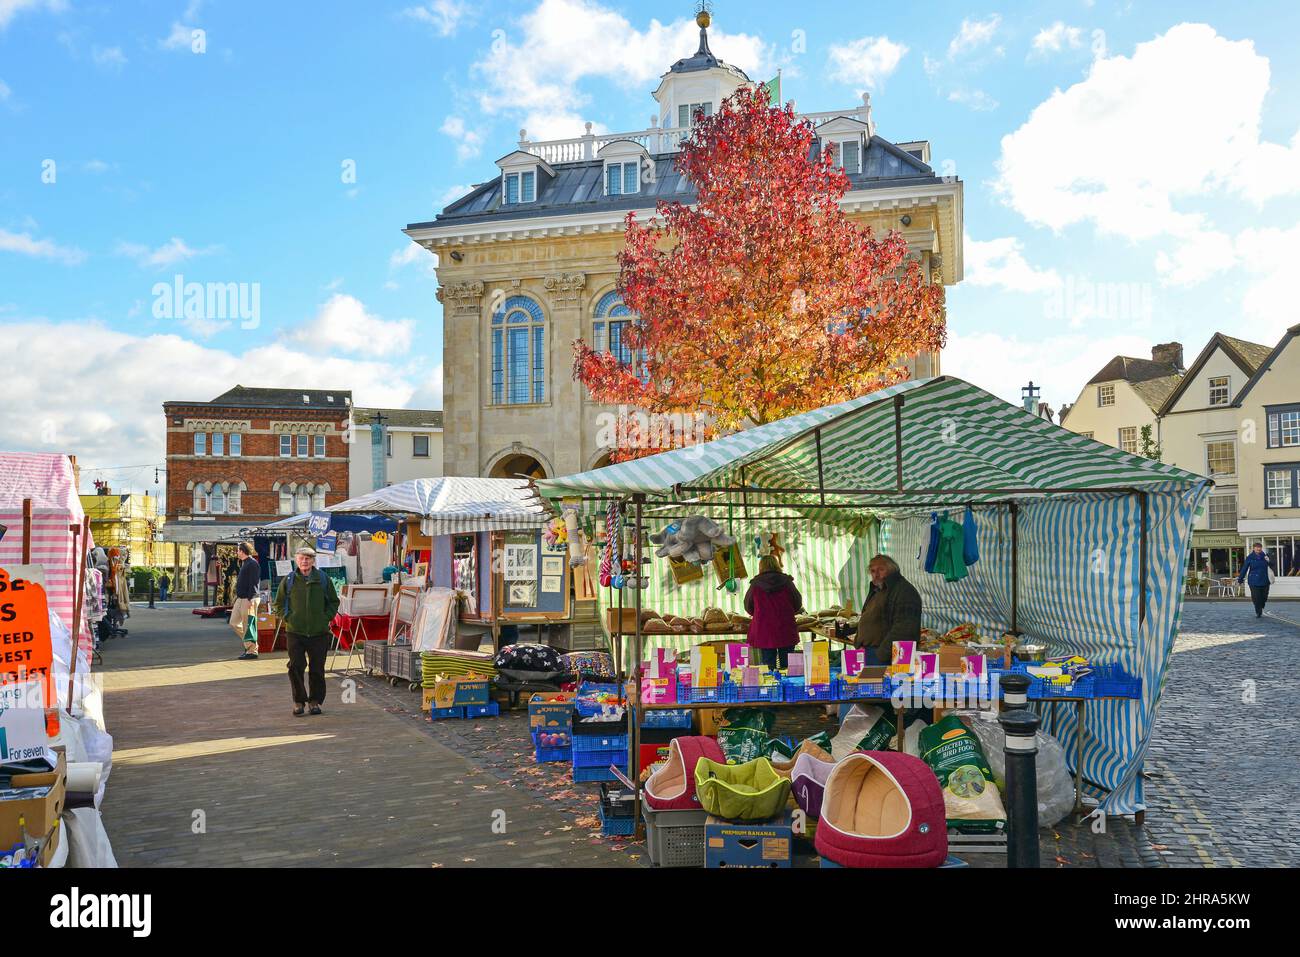 Outdoor market in autumn, Market Place, Abingdon-on-Thames, Oxfordshire, England, United Kingdom Stock Photo